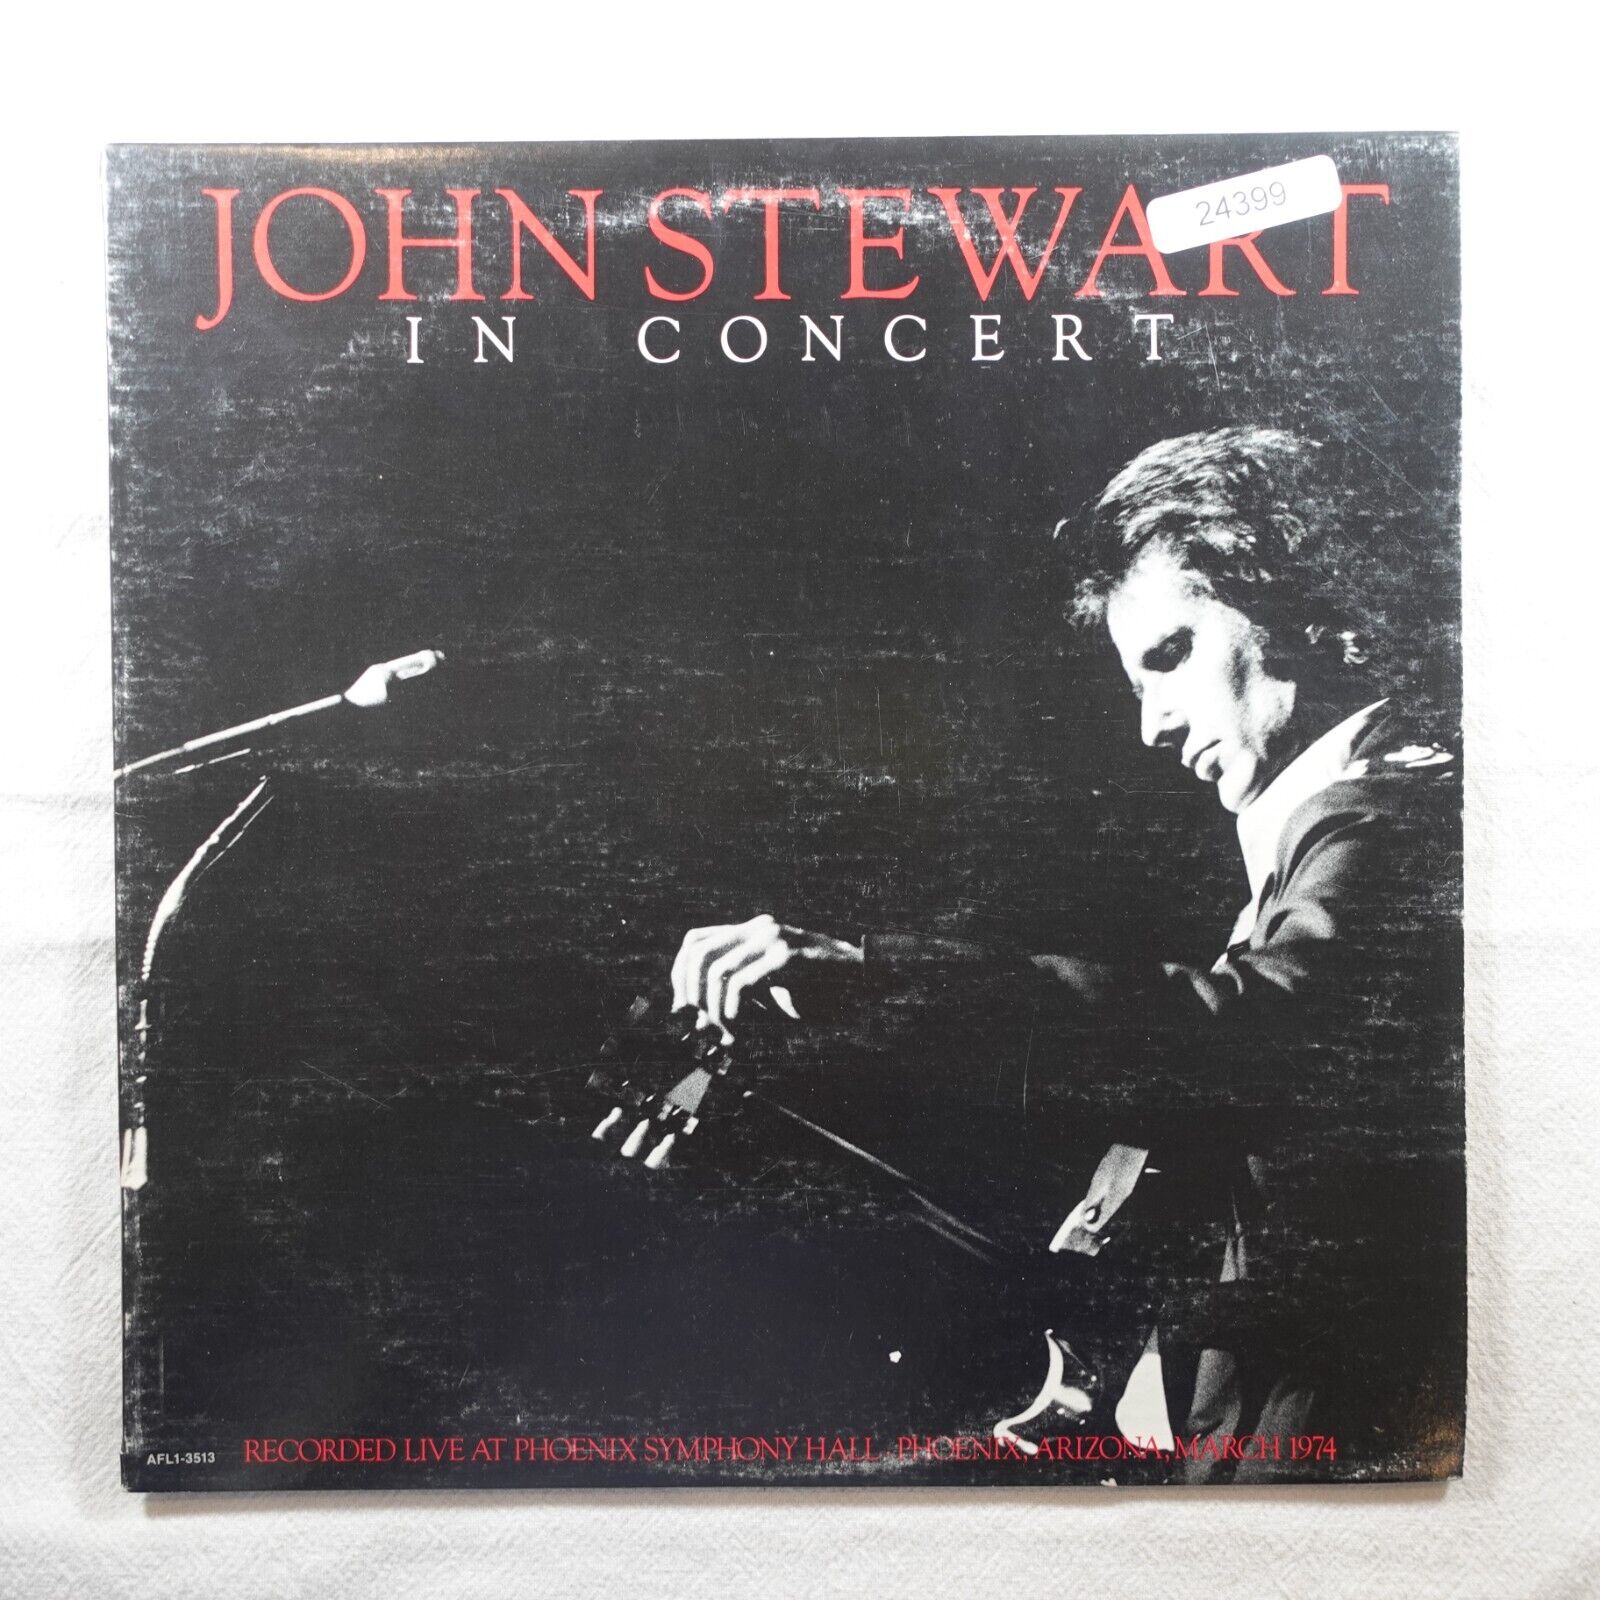 John Stewart In Concert   Record Album Vinyl LP